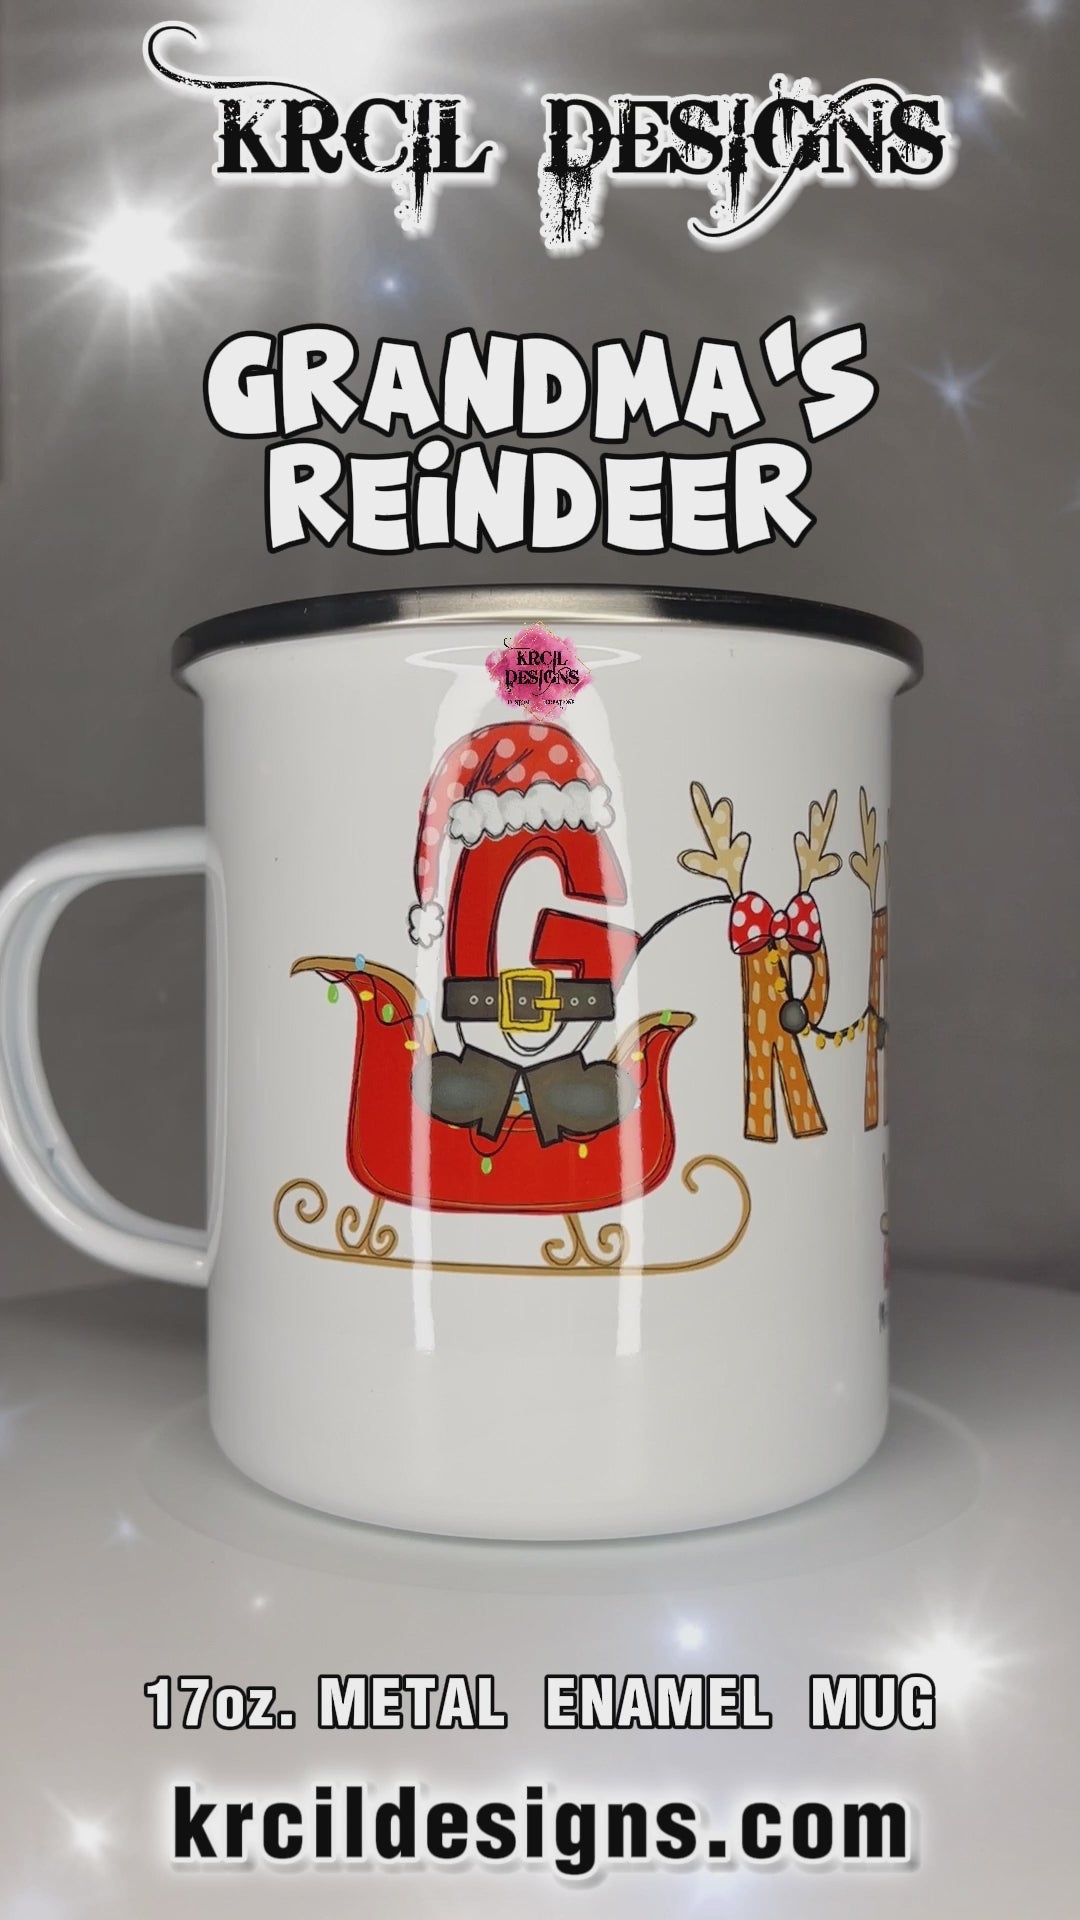 Better Homes And Gardens Stainless Steel Christmas Reindeer Cup Mug Set